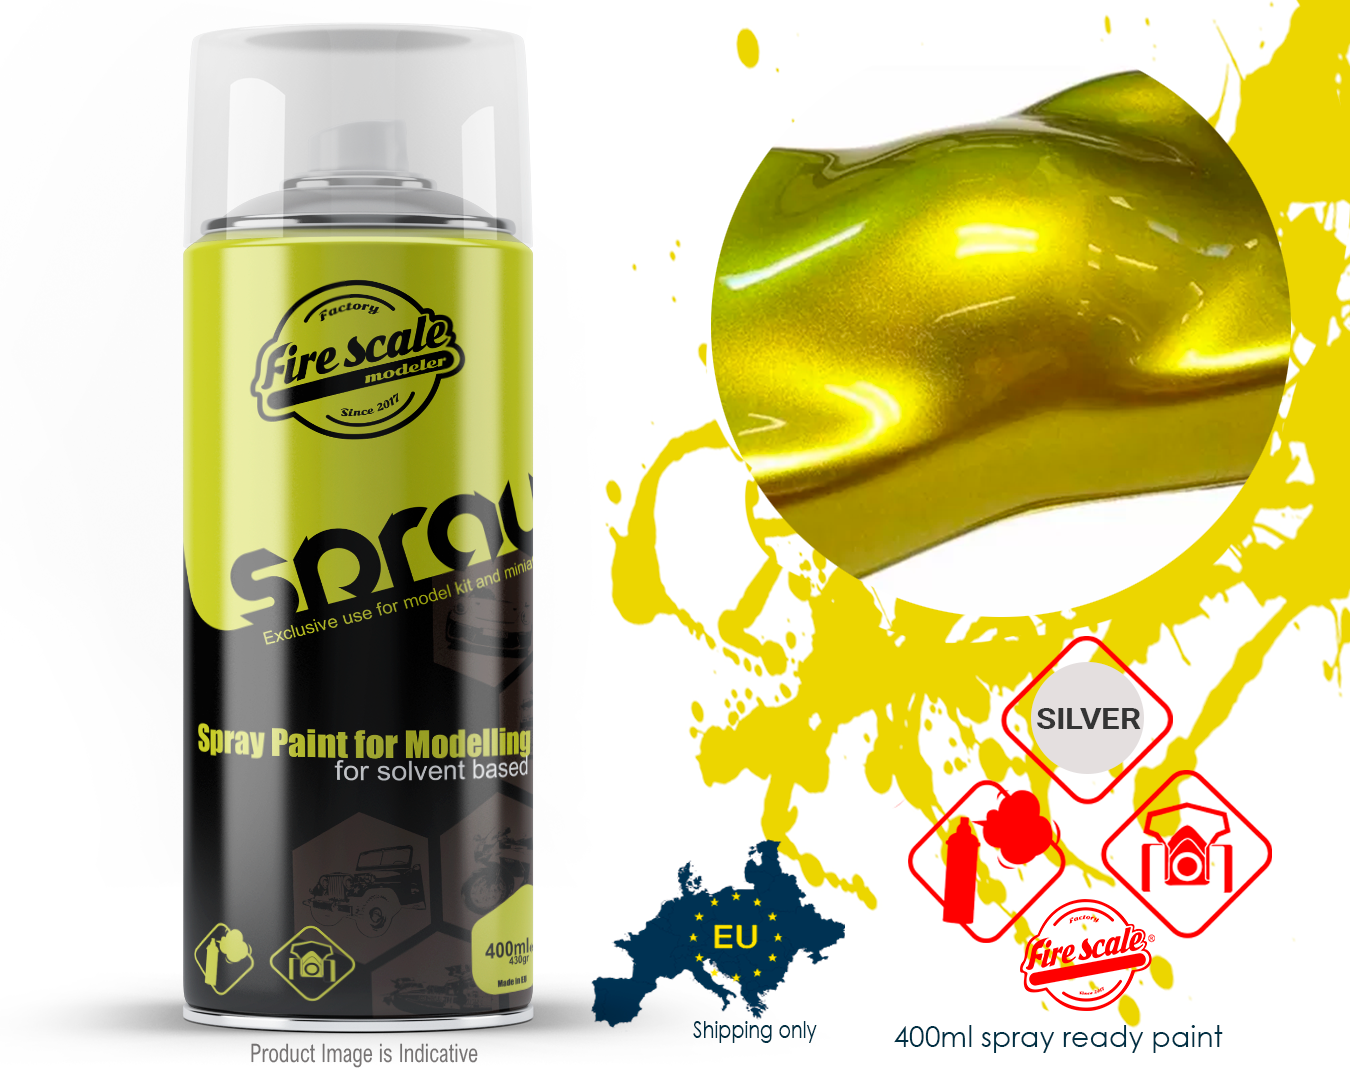 Yellow Lime 400ml – dmodelkits